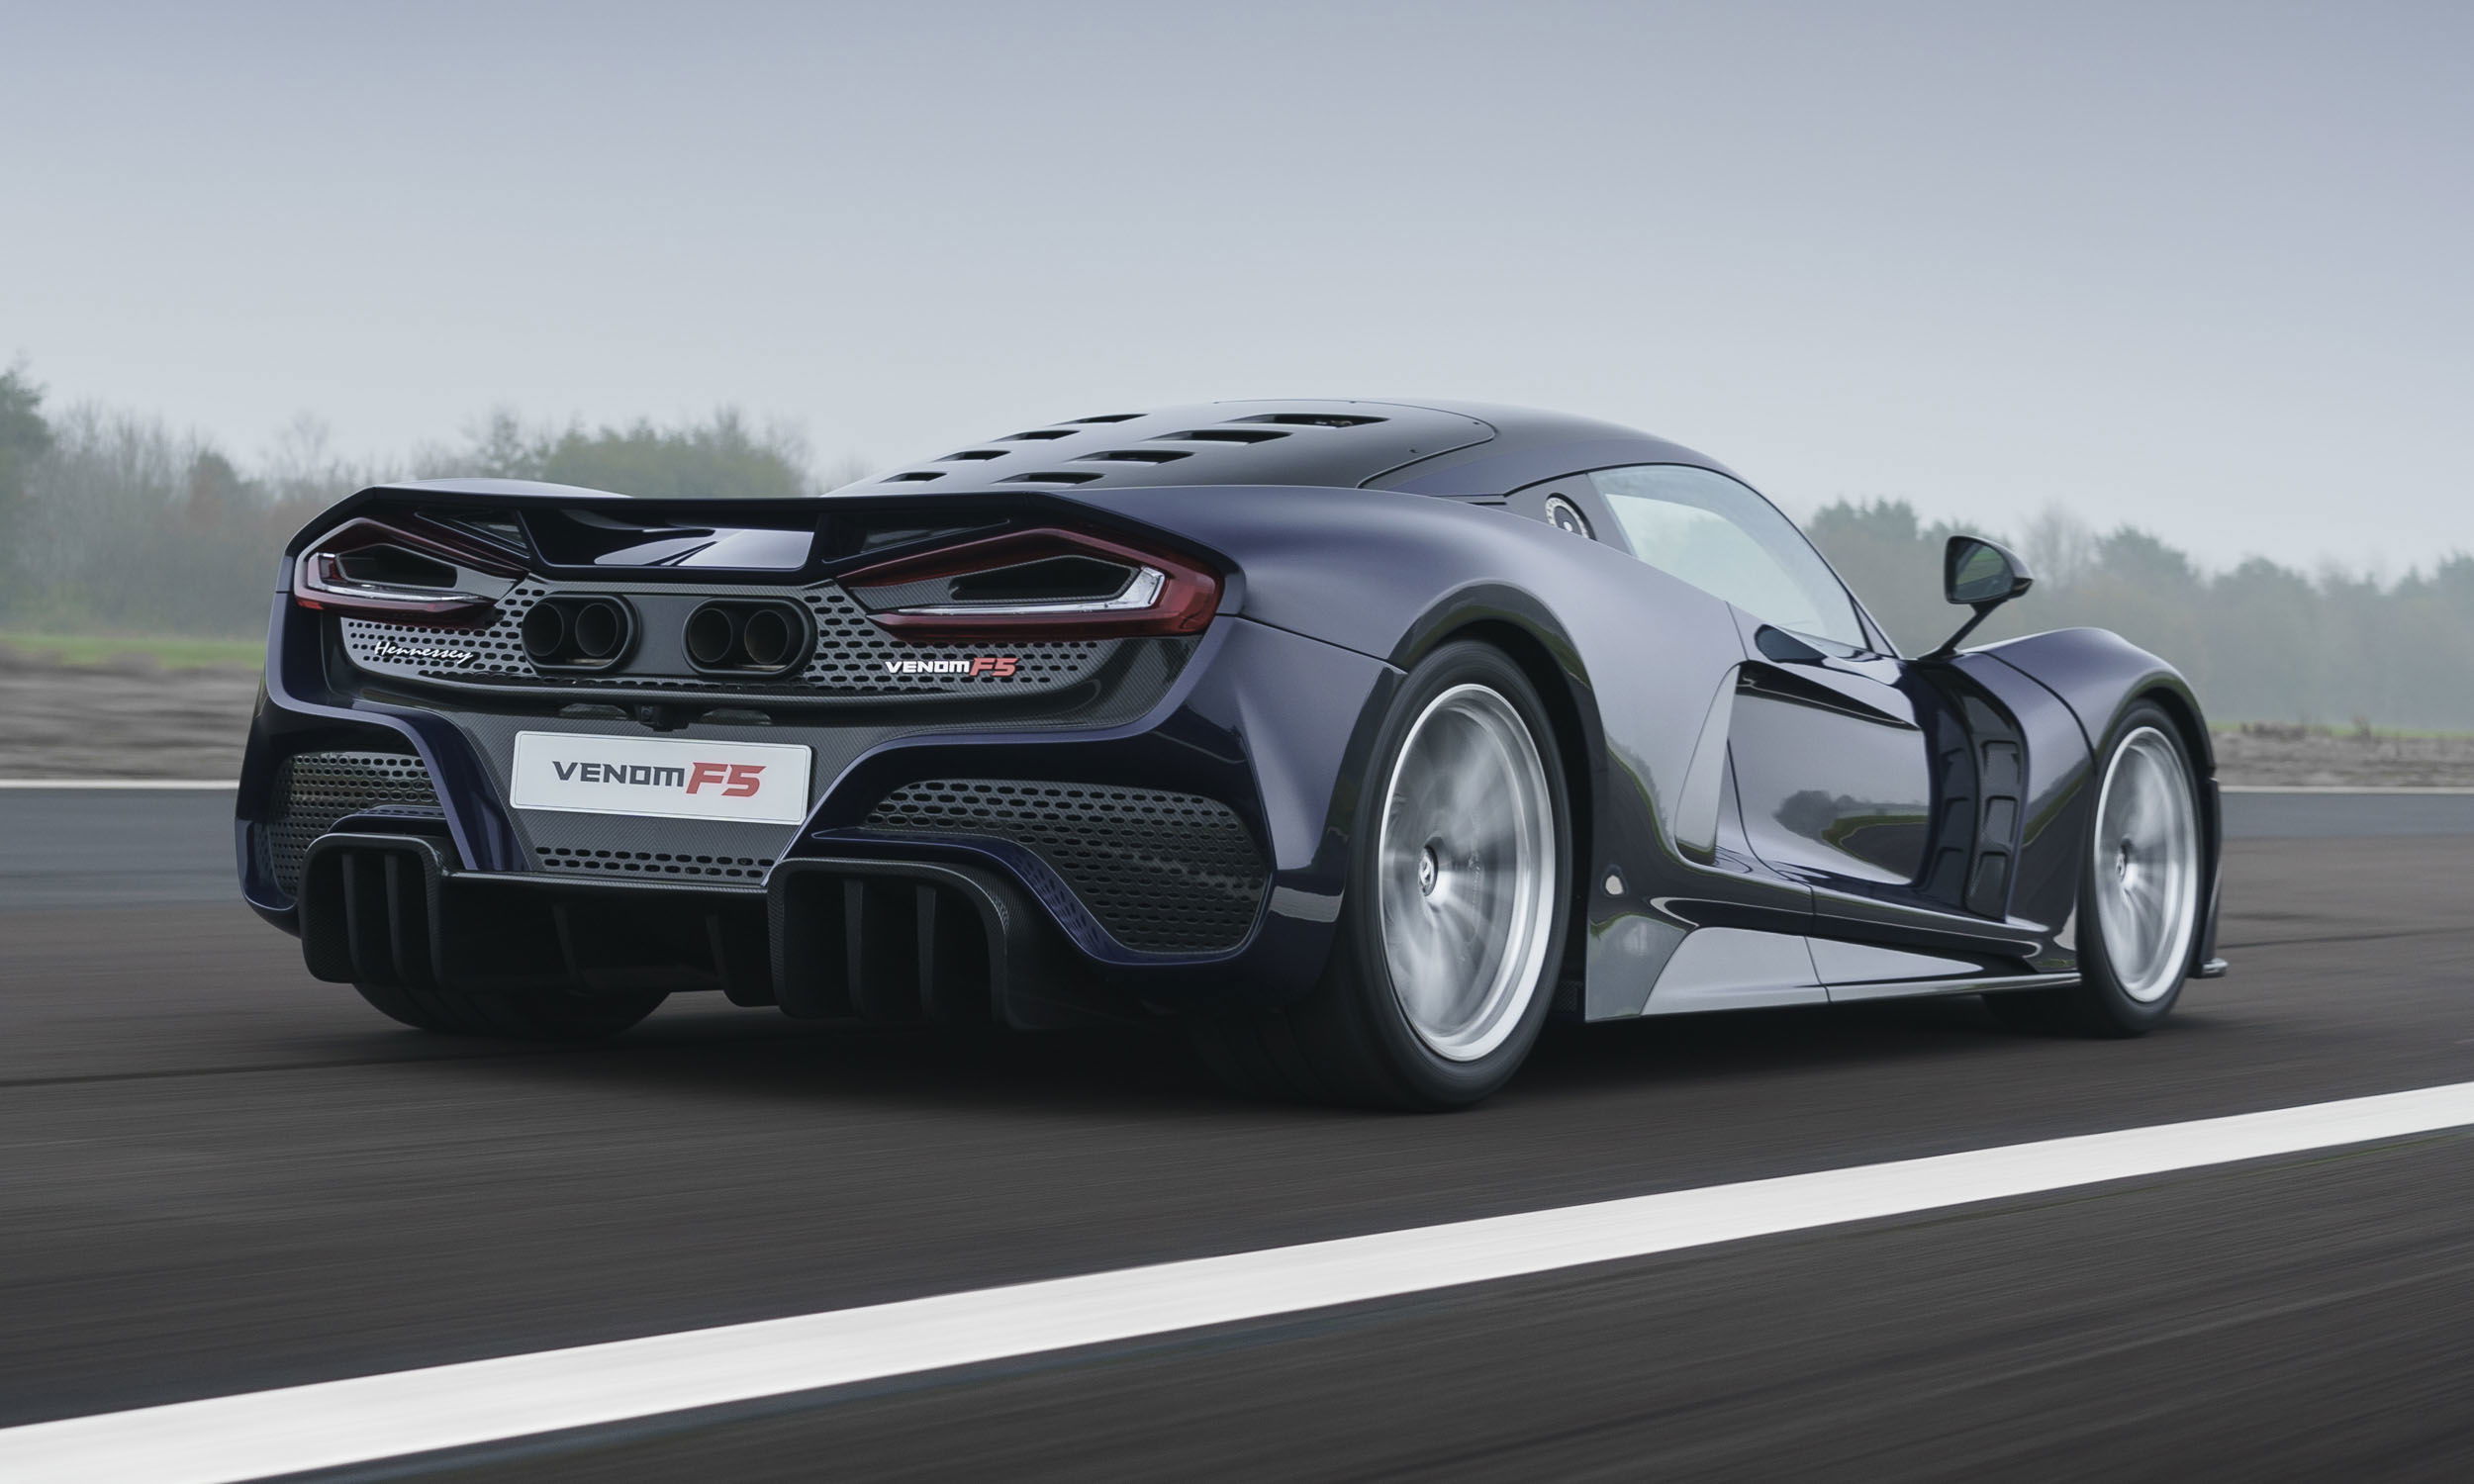 Hennessey-Venom-F5 rear via Our Auto Expert.